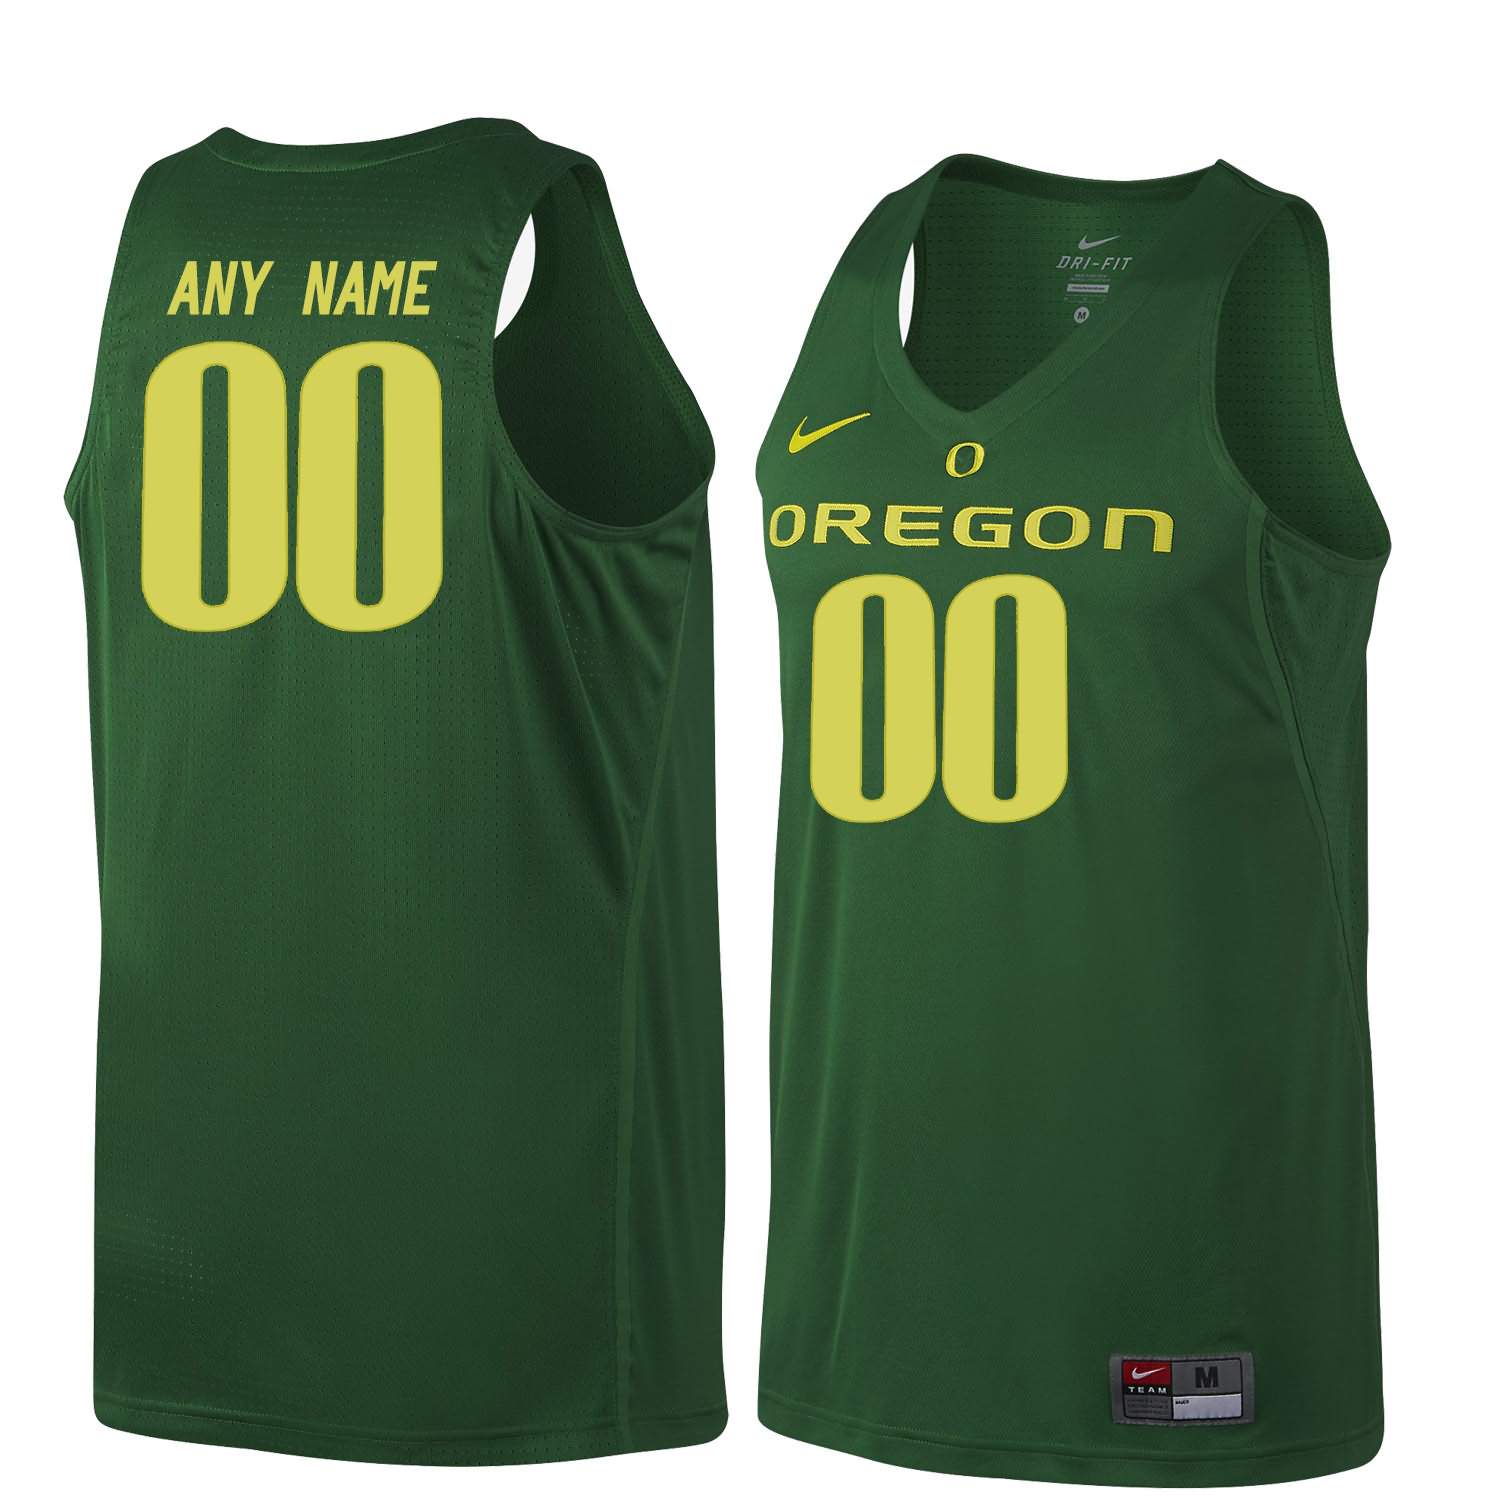 Oregon Ducks Men's #00 Customized Basketball College Dark Green Jersey COM58O5C